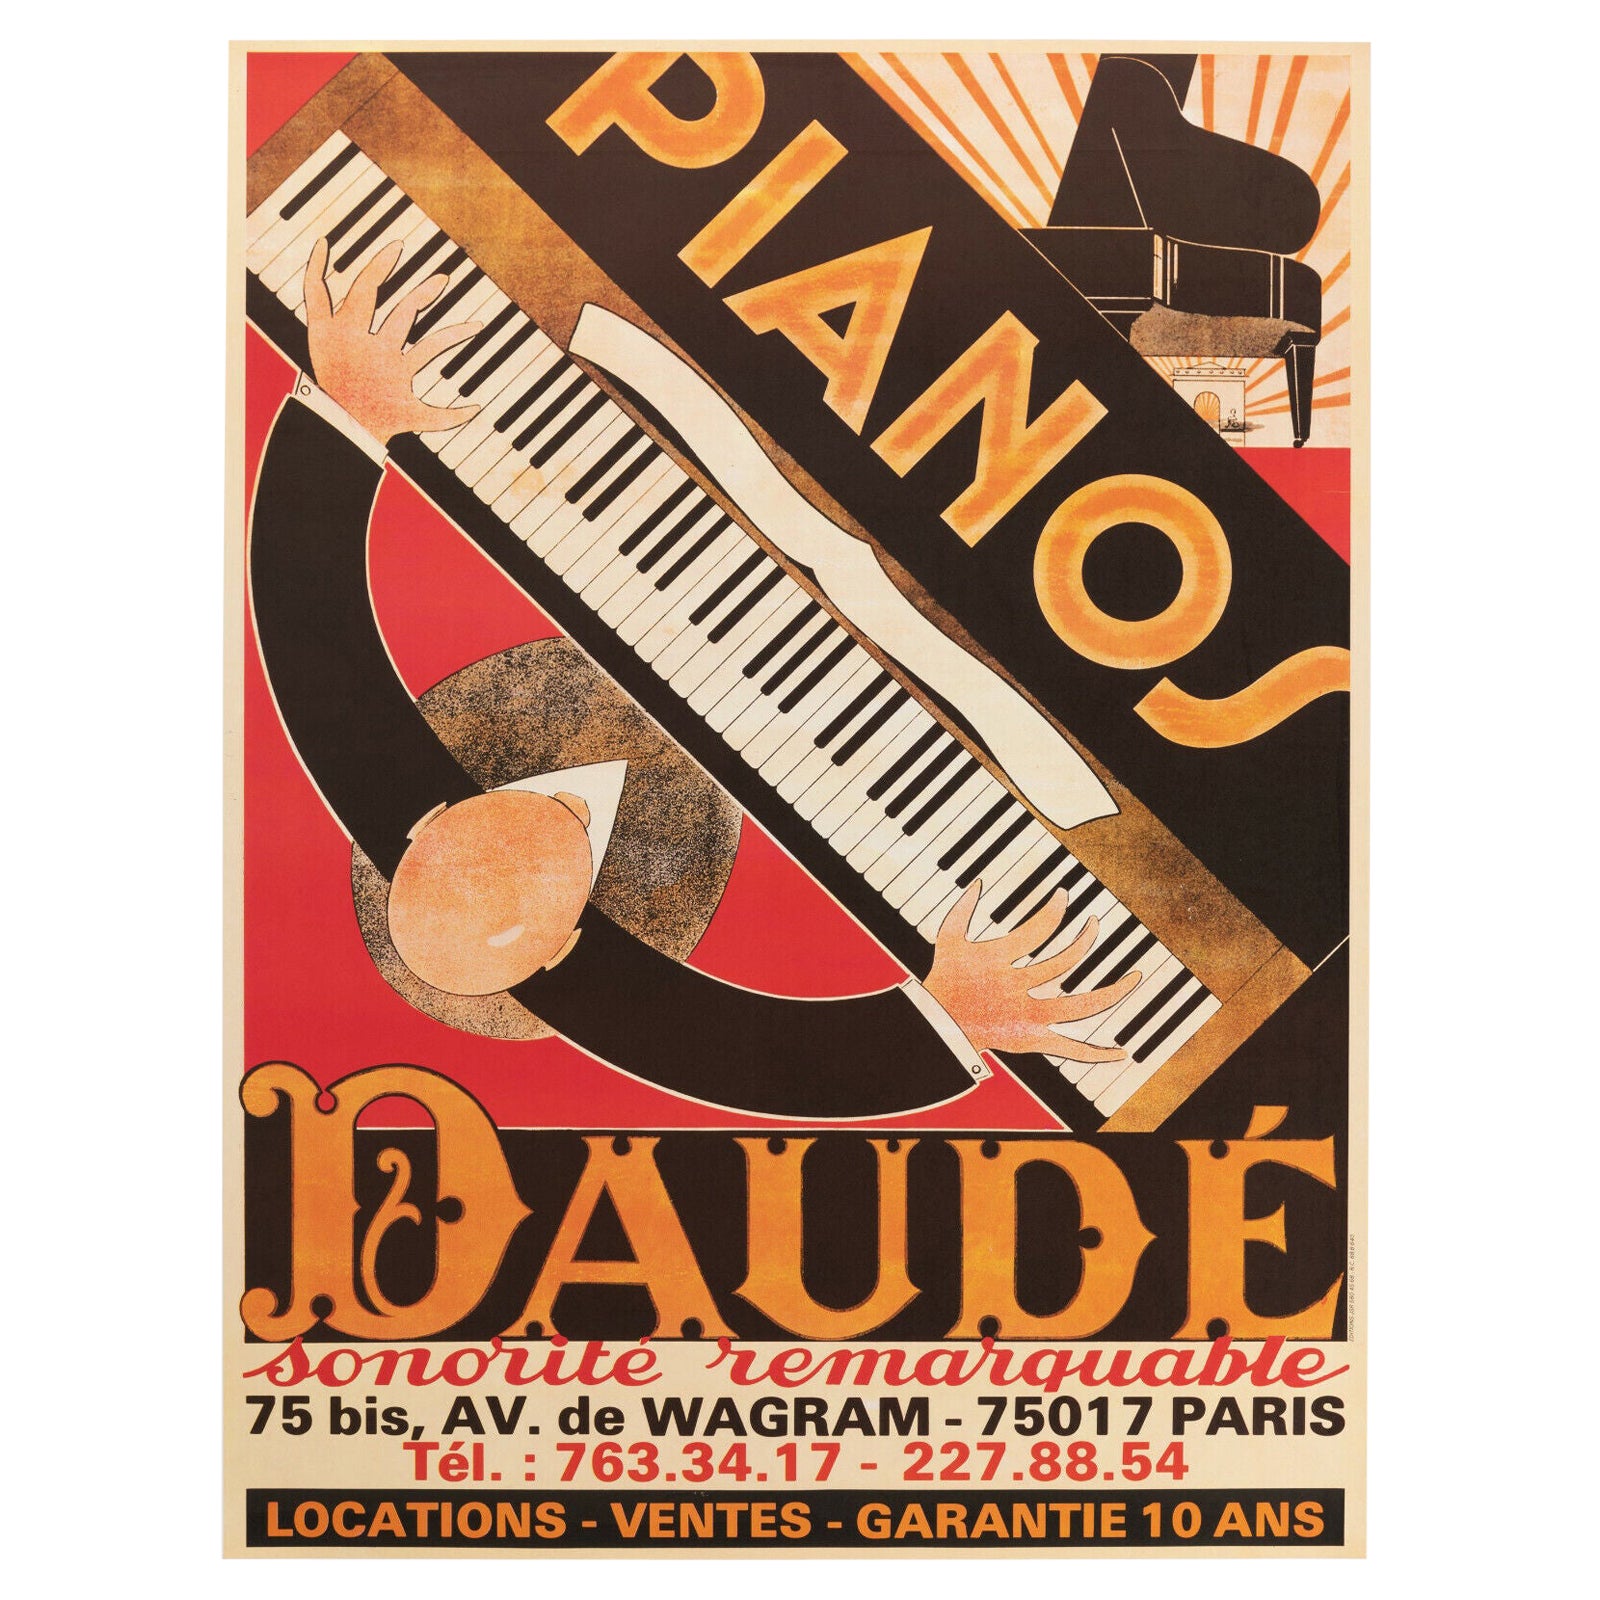 Andre Daude, affiche de musique originale vintage, Piano Daude, Paris, 1980 en vente